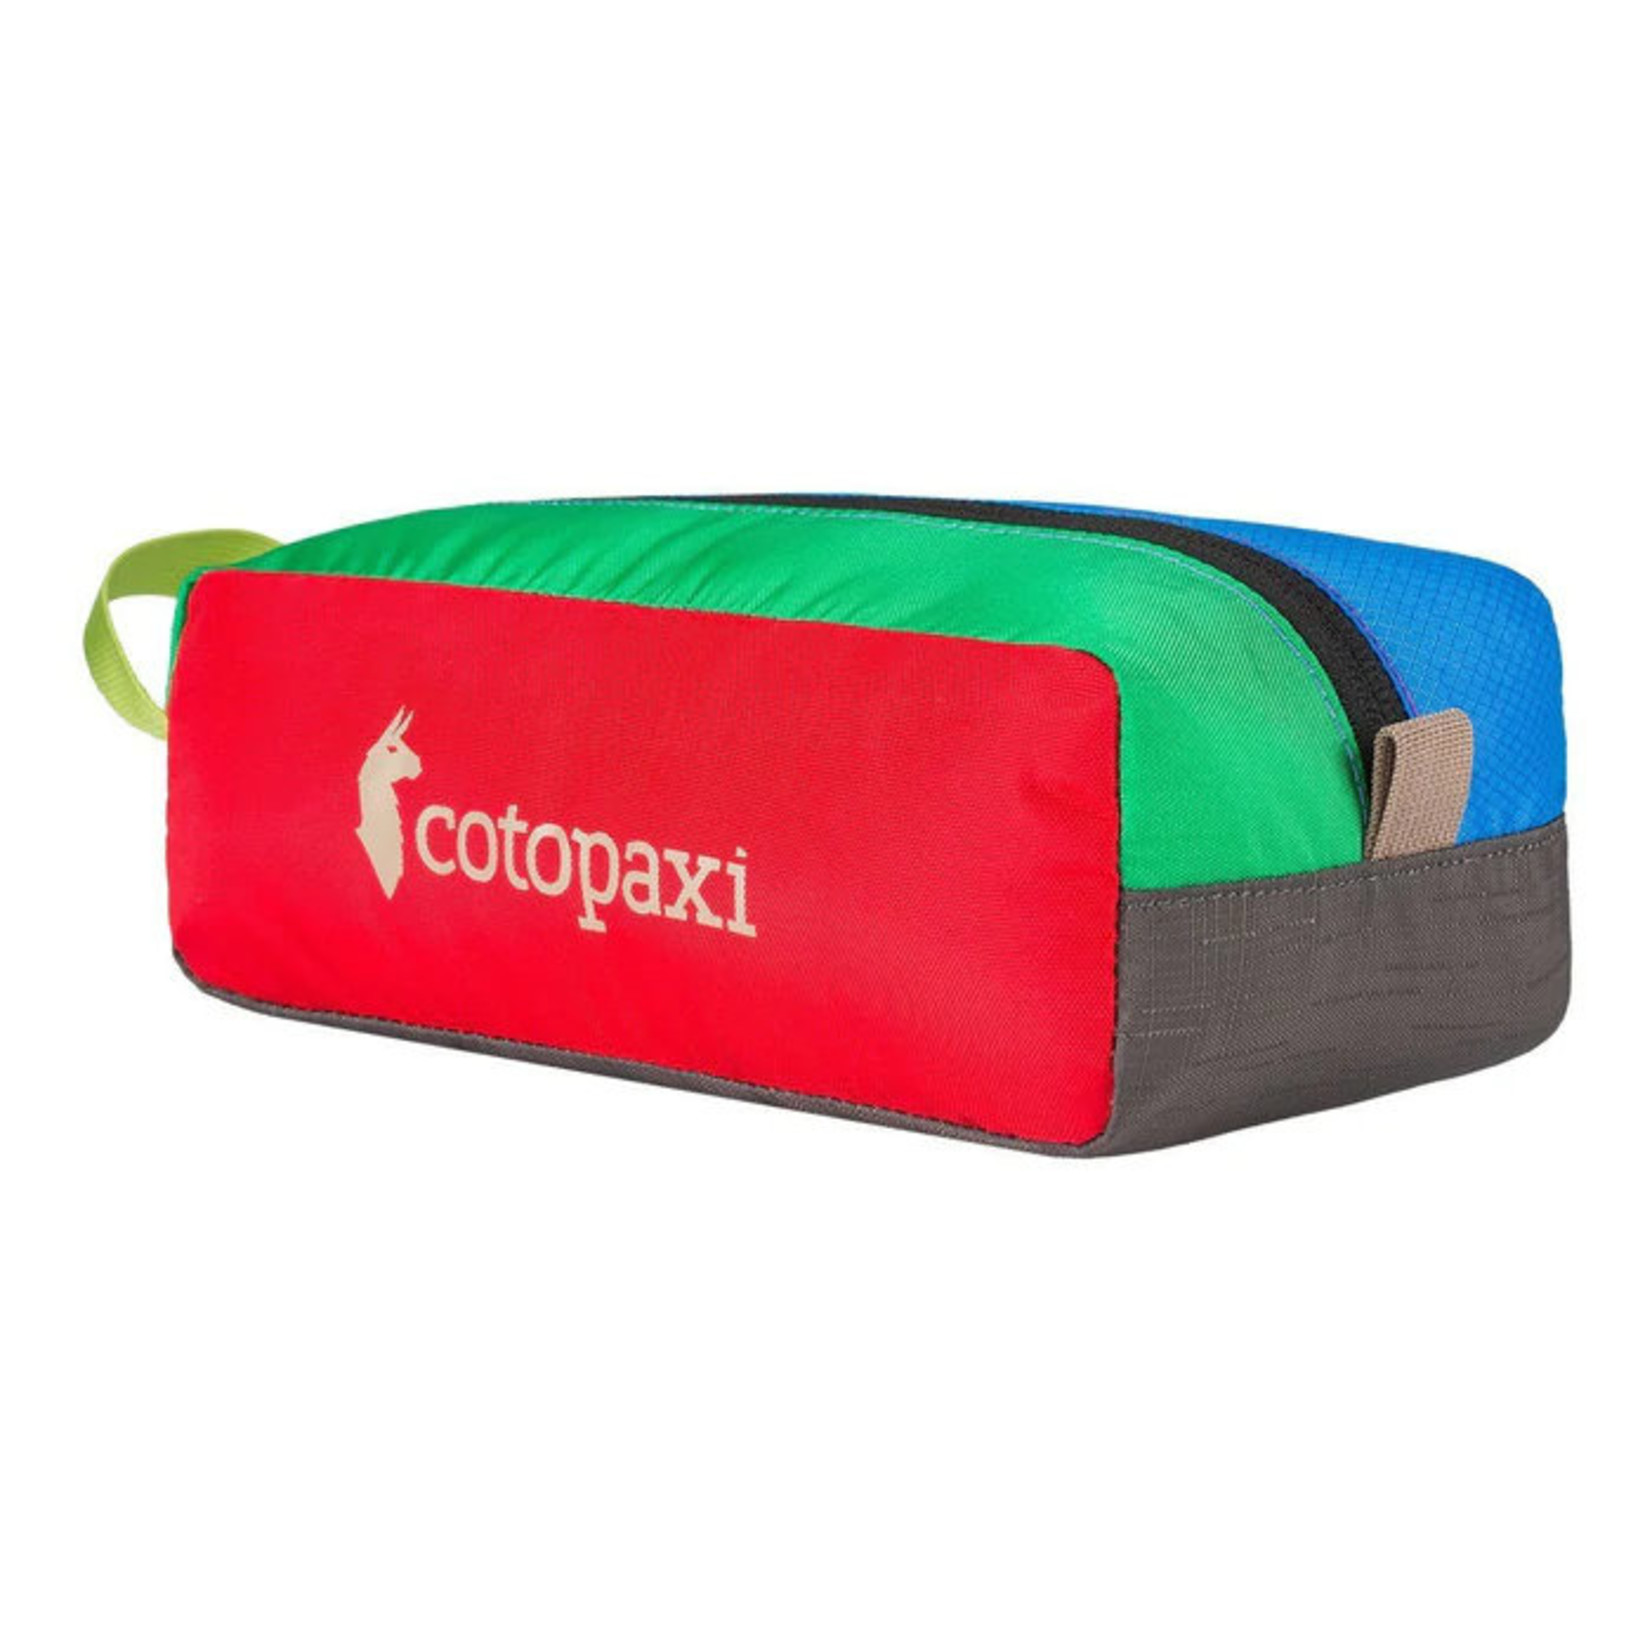 Cotopaxi Cotopaxi Dopp Kit Toiletry Bag - Del Día